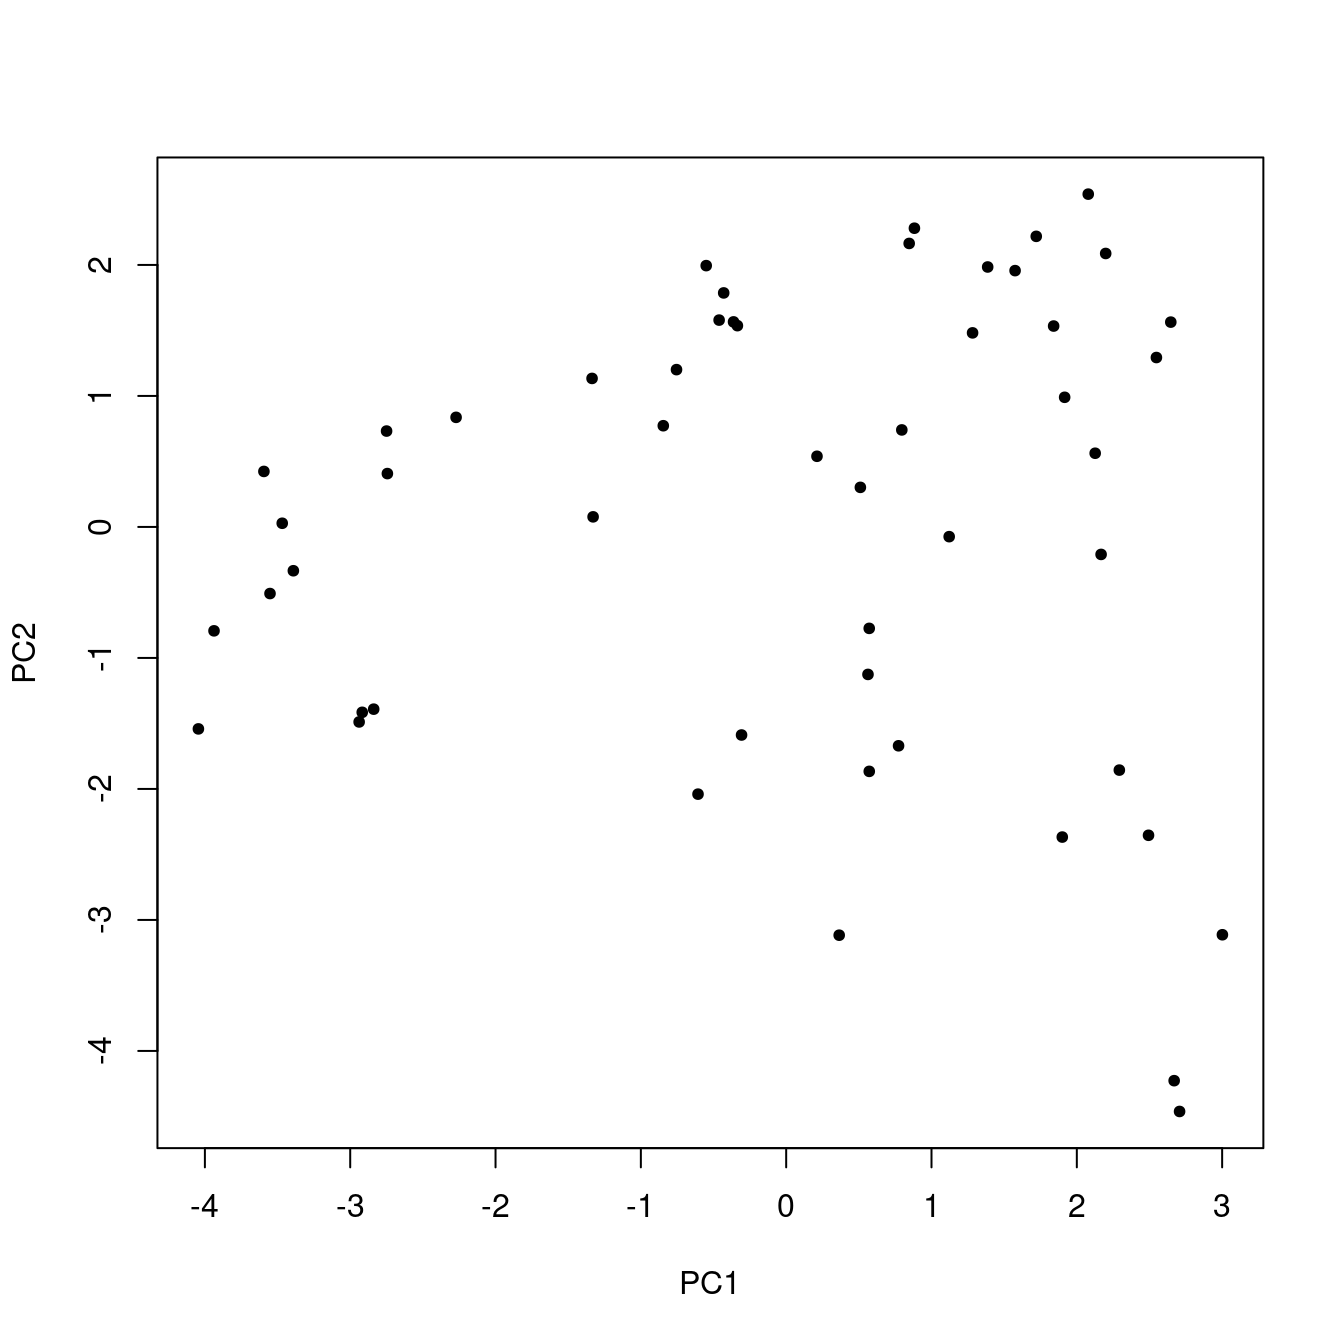 Score plot using all the data.